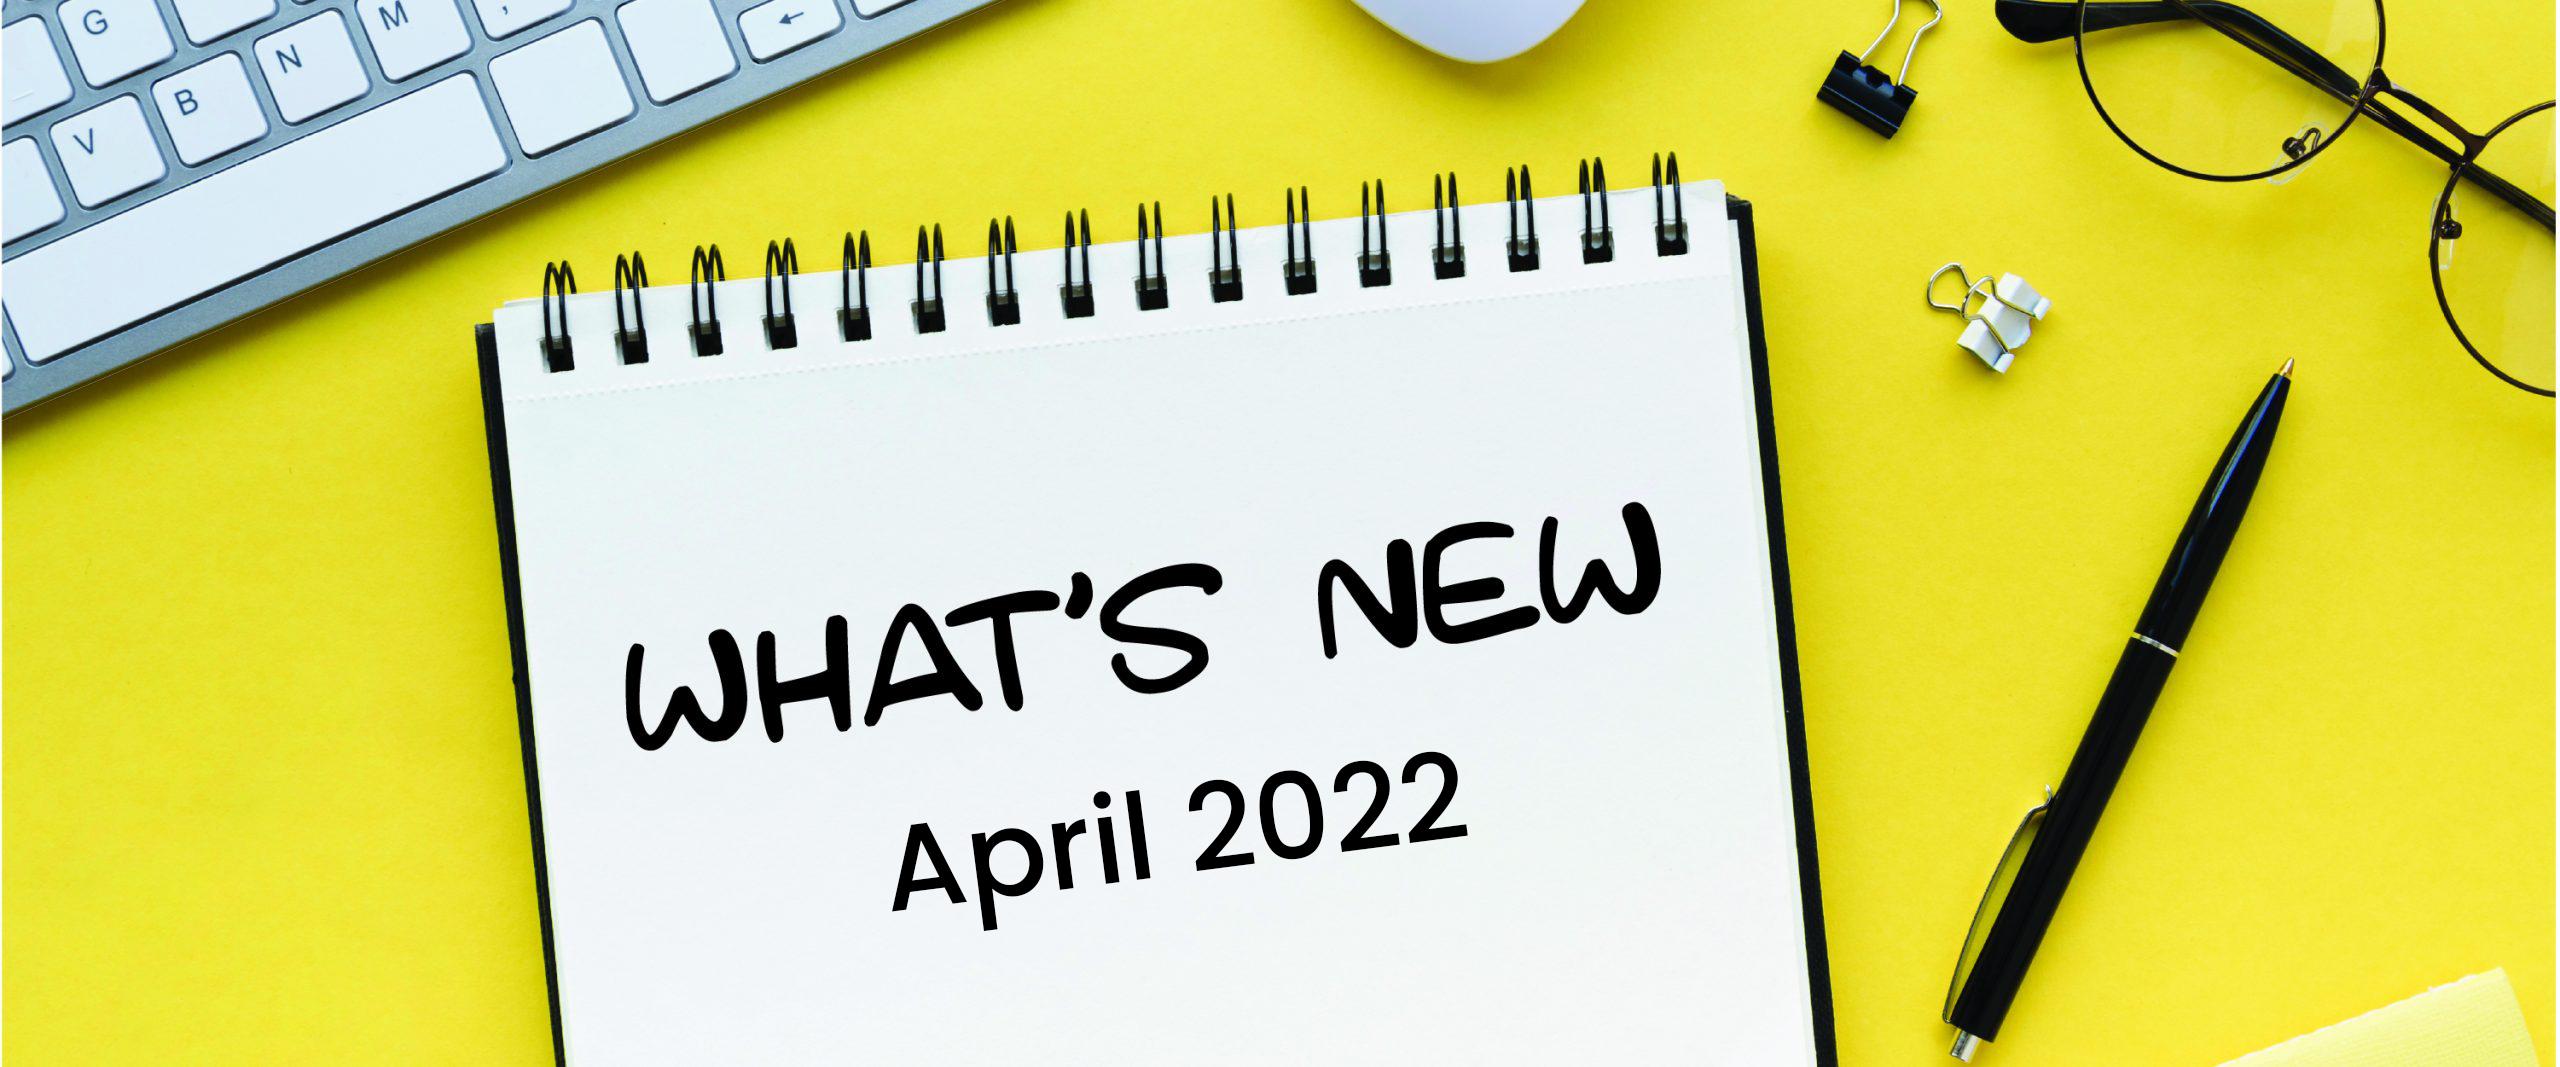 News Flash April 2022